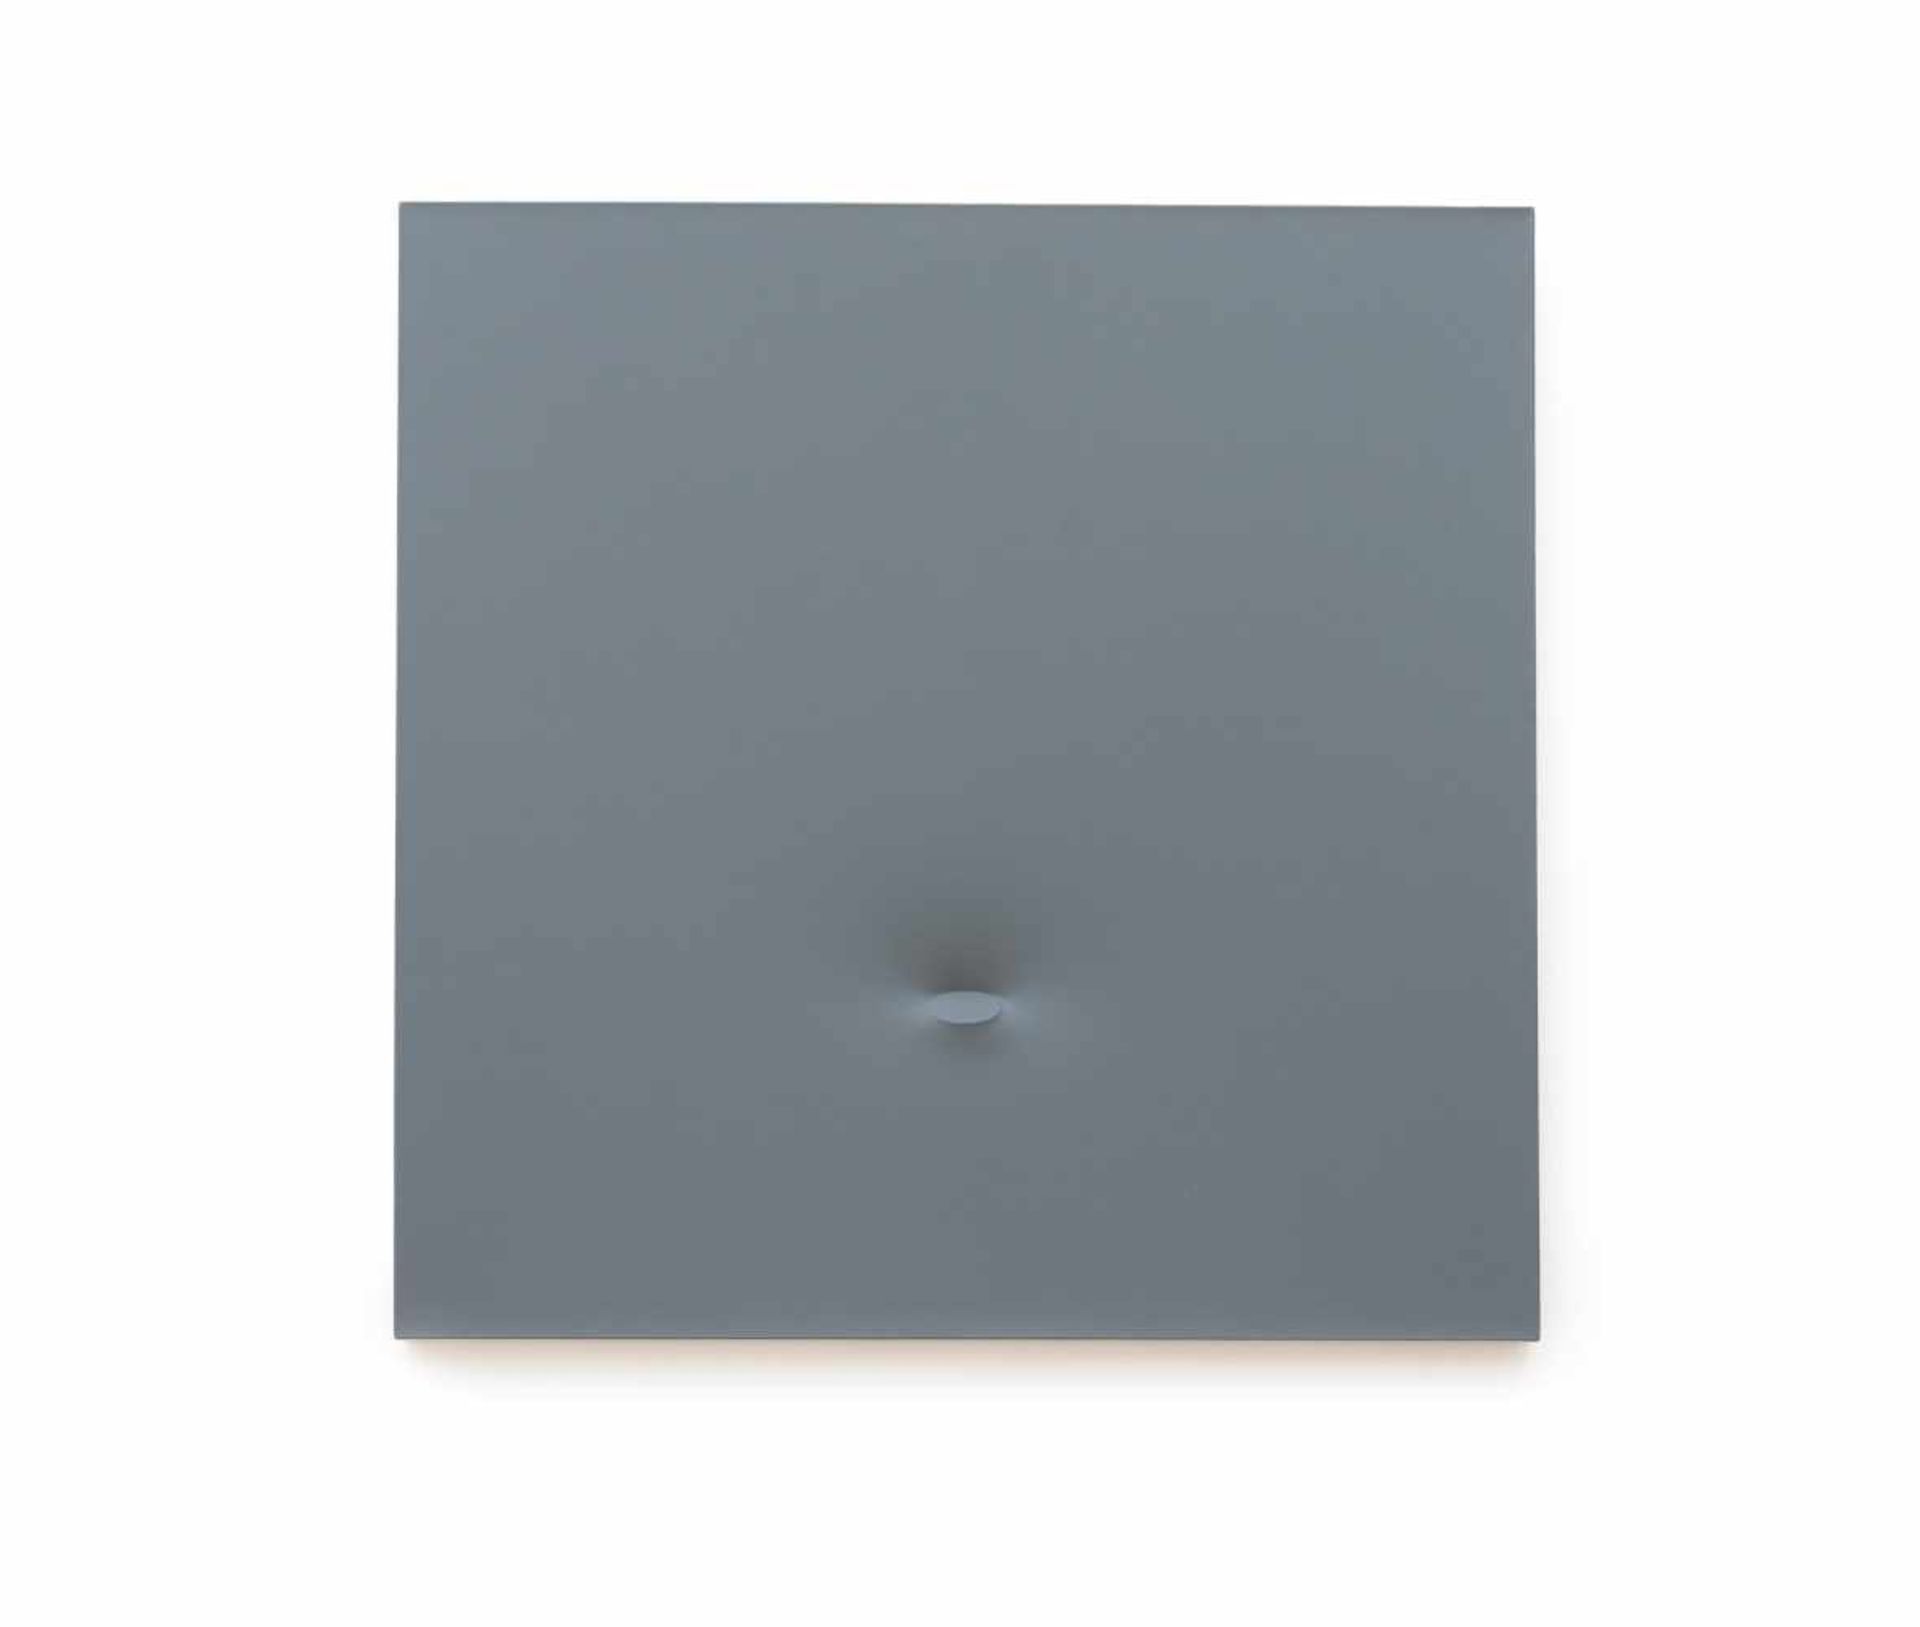 Turi Simeti1929 AlcamoUn ovale grigio (Graues Oval)Acryl auf geformter Leinwand. 1984. Ca. 100 x 100